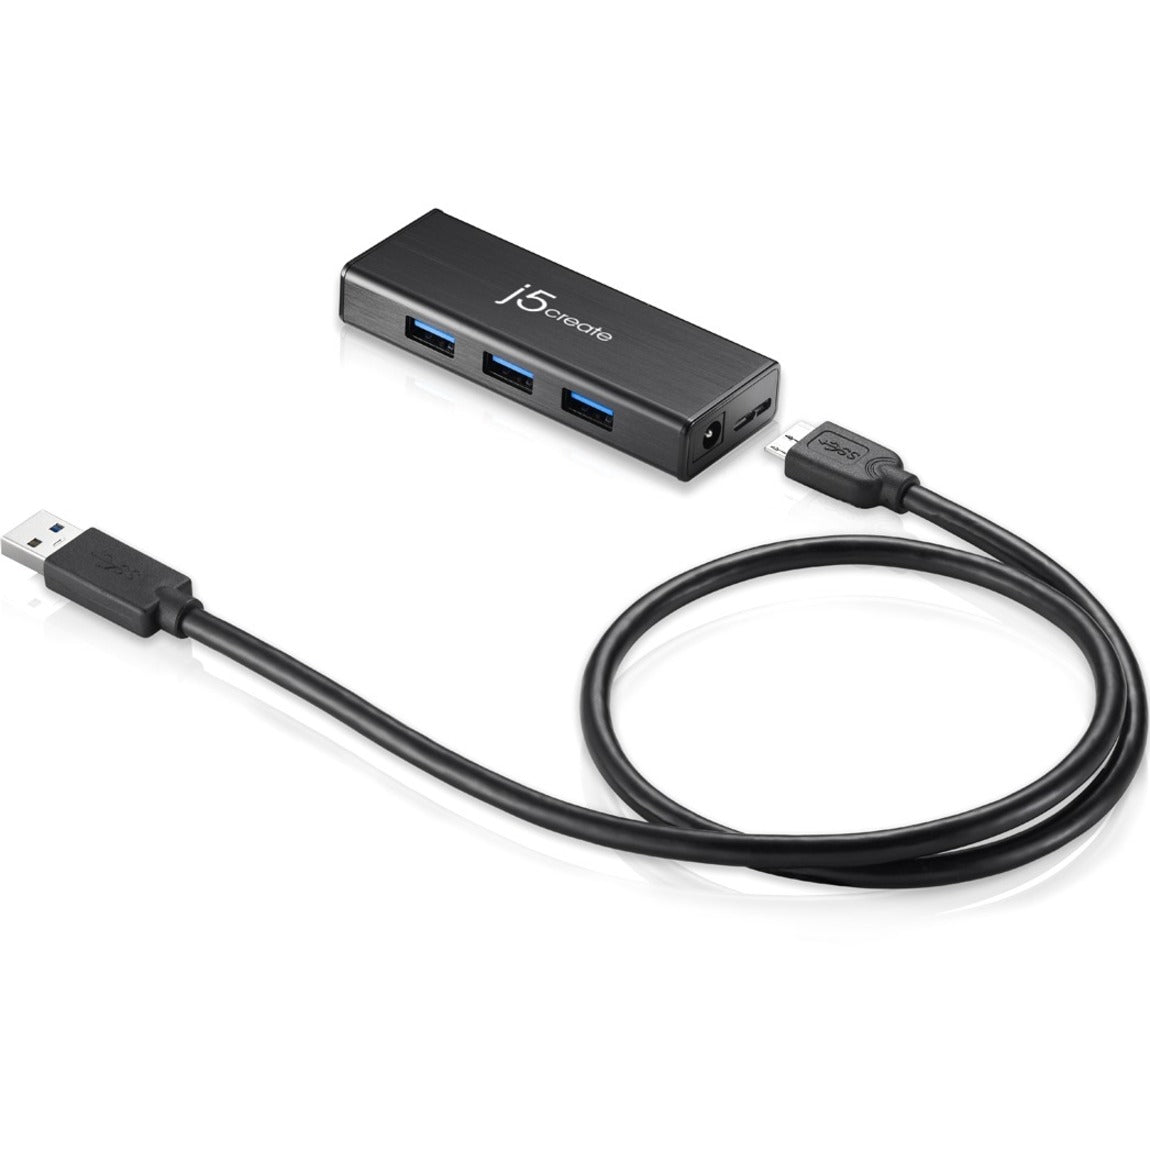 j5 create JUH340 USB 3.0 4-port Mini Hub, Expand Your USB Connectivity Effortlessly